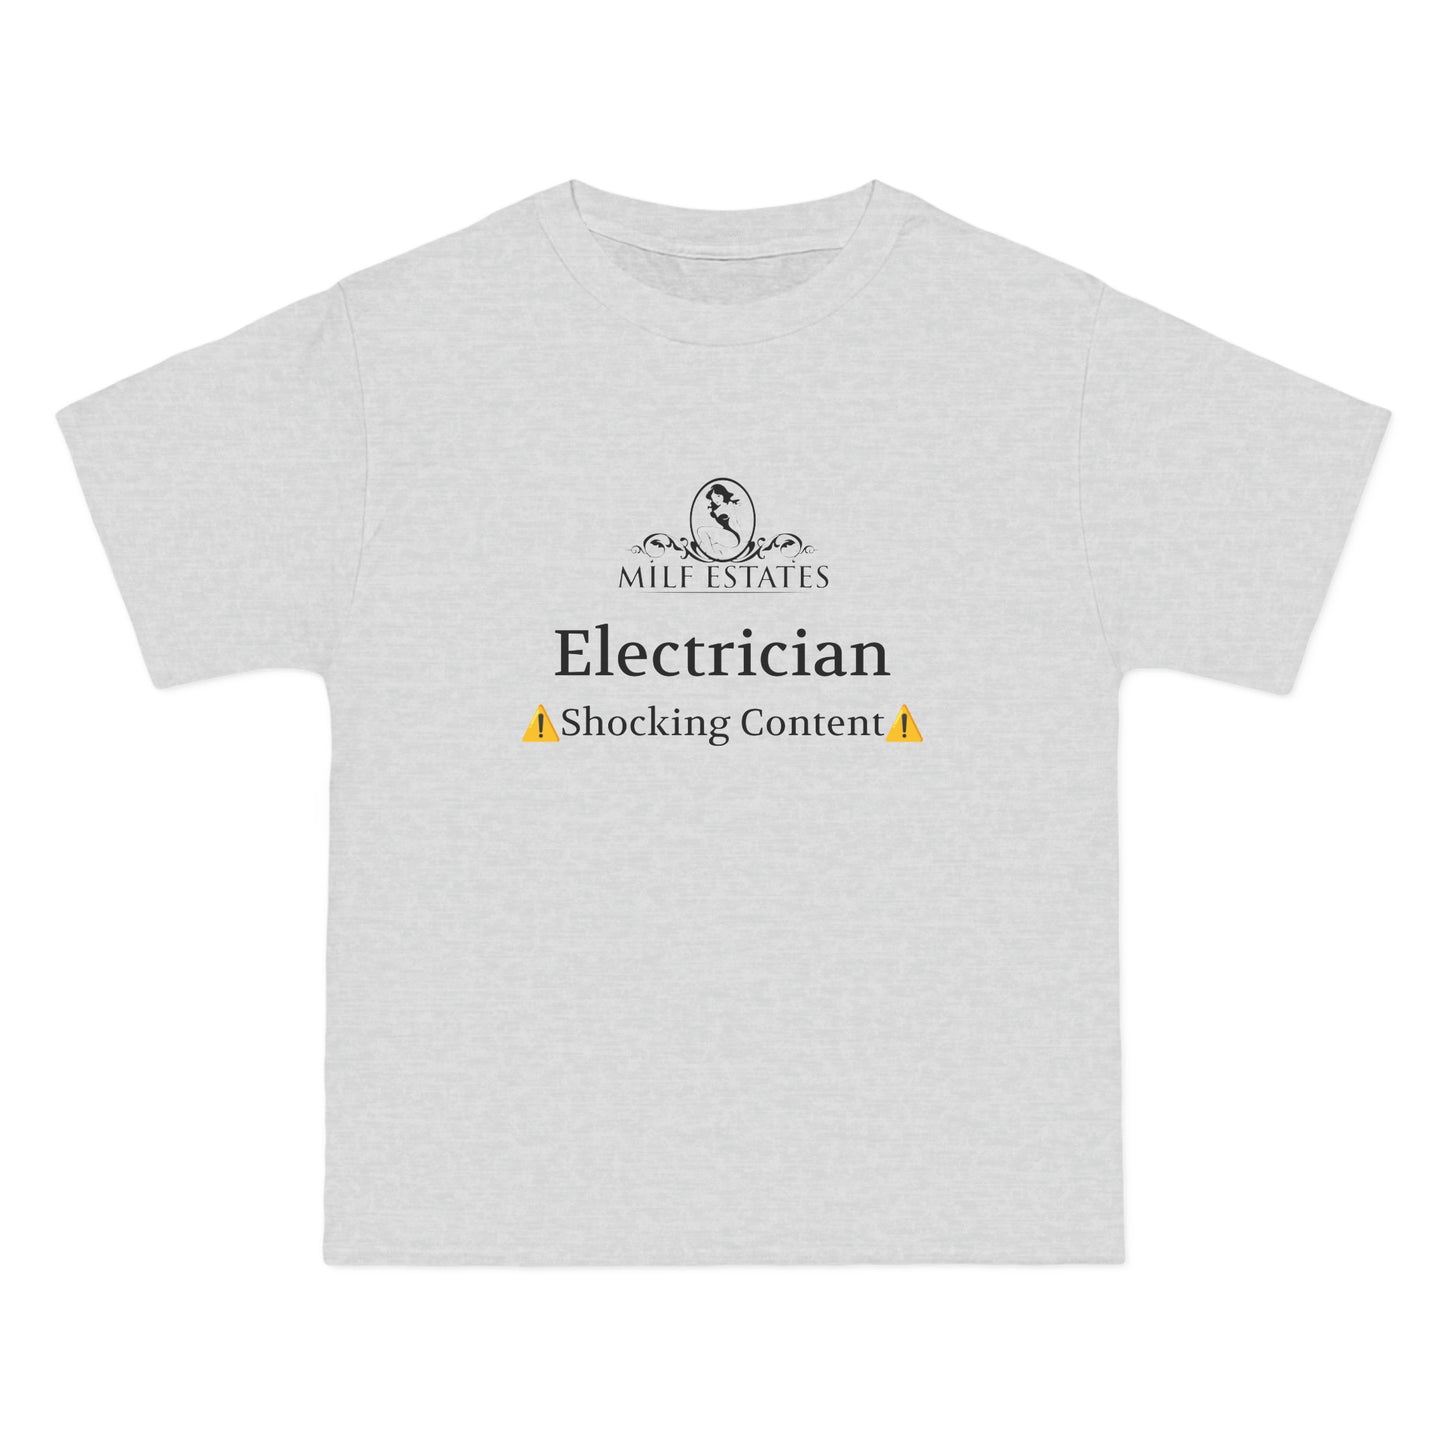 MILF ESTATES -Logo- Electrician !Shocking Content!